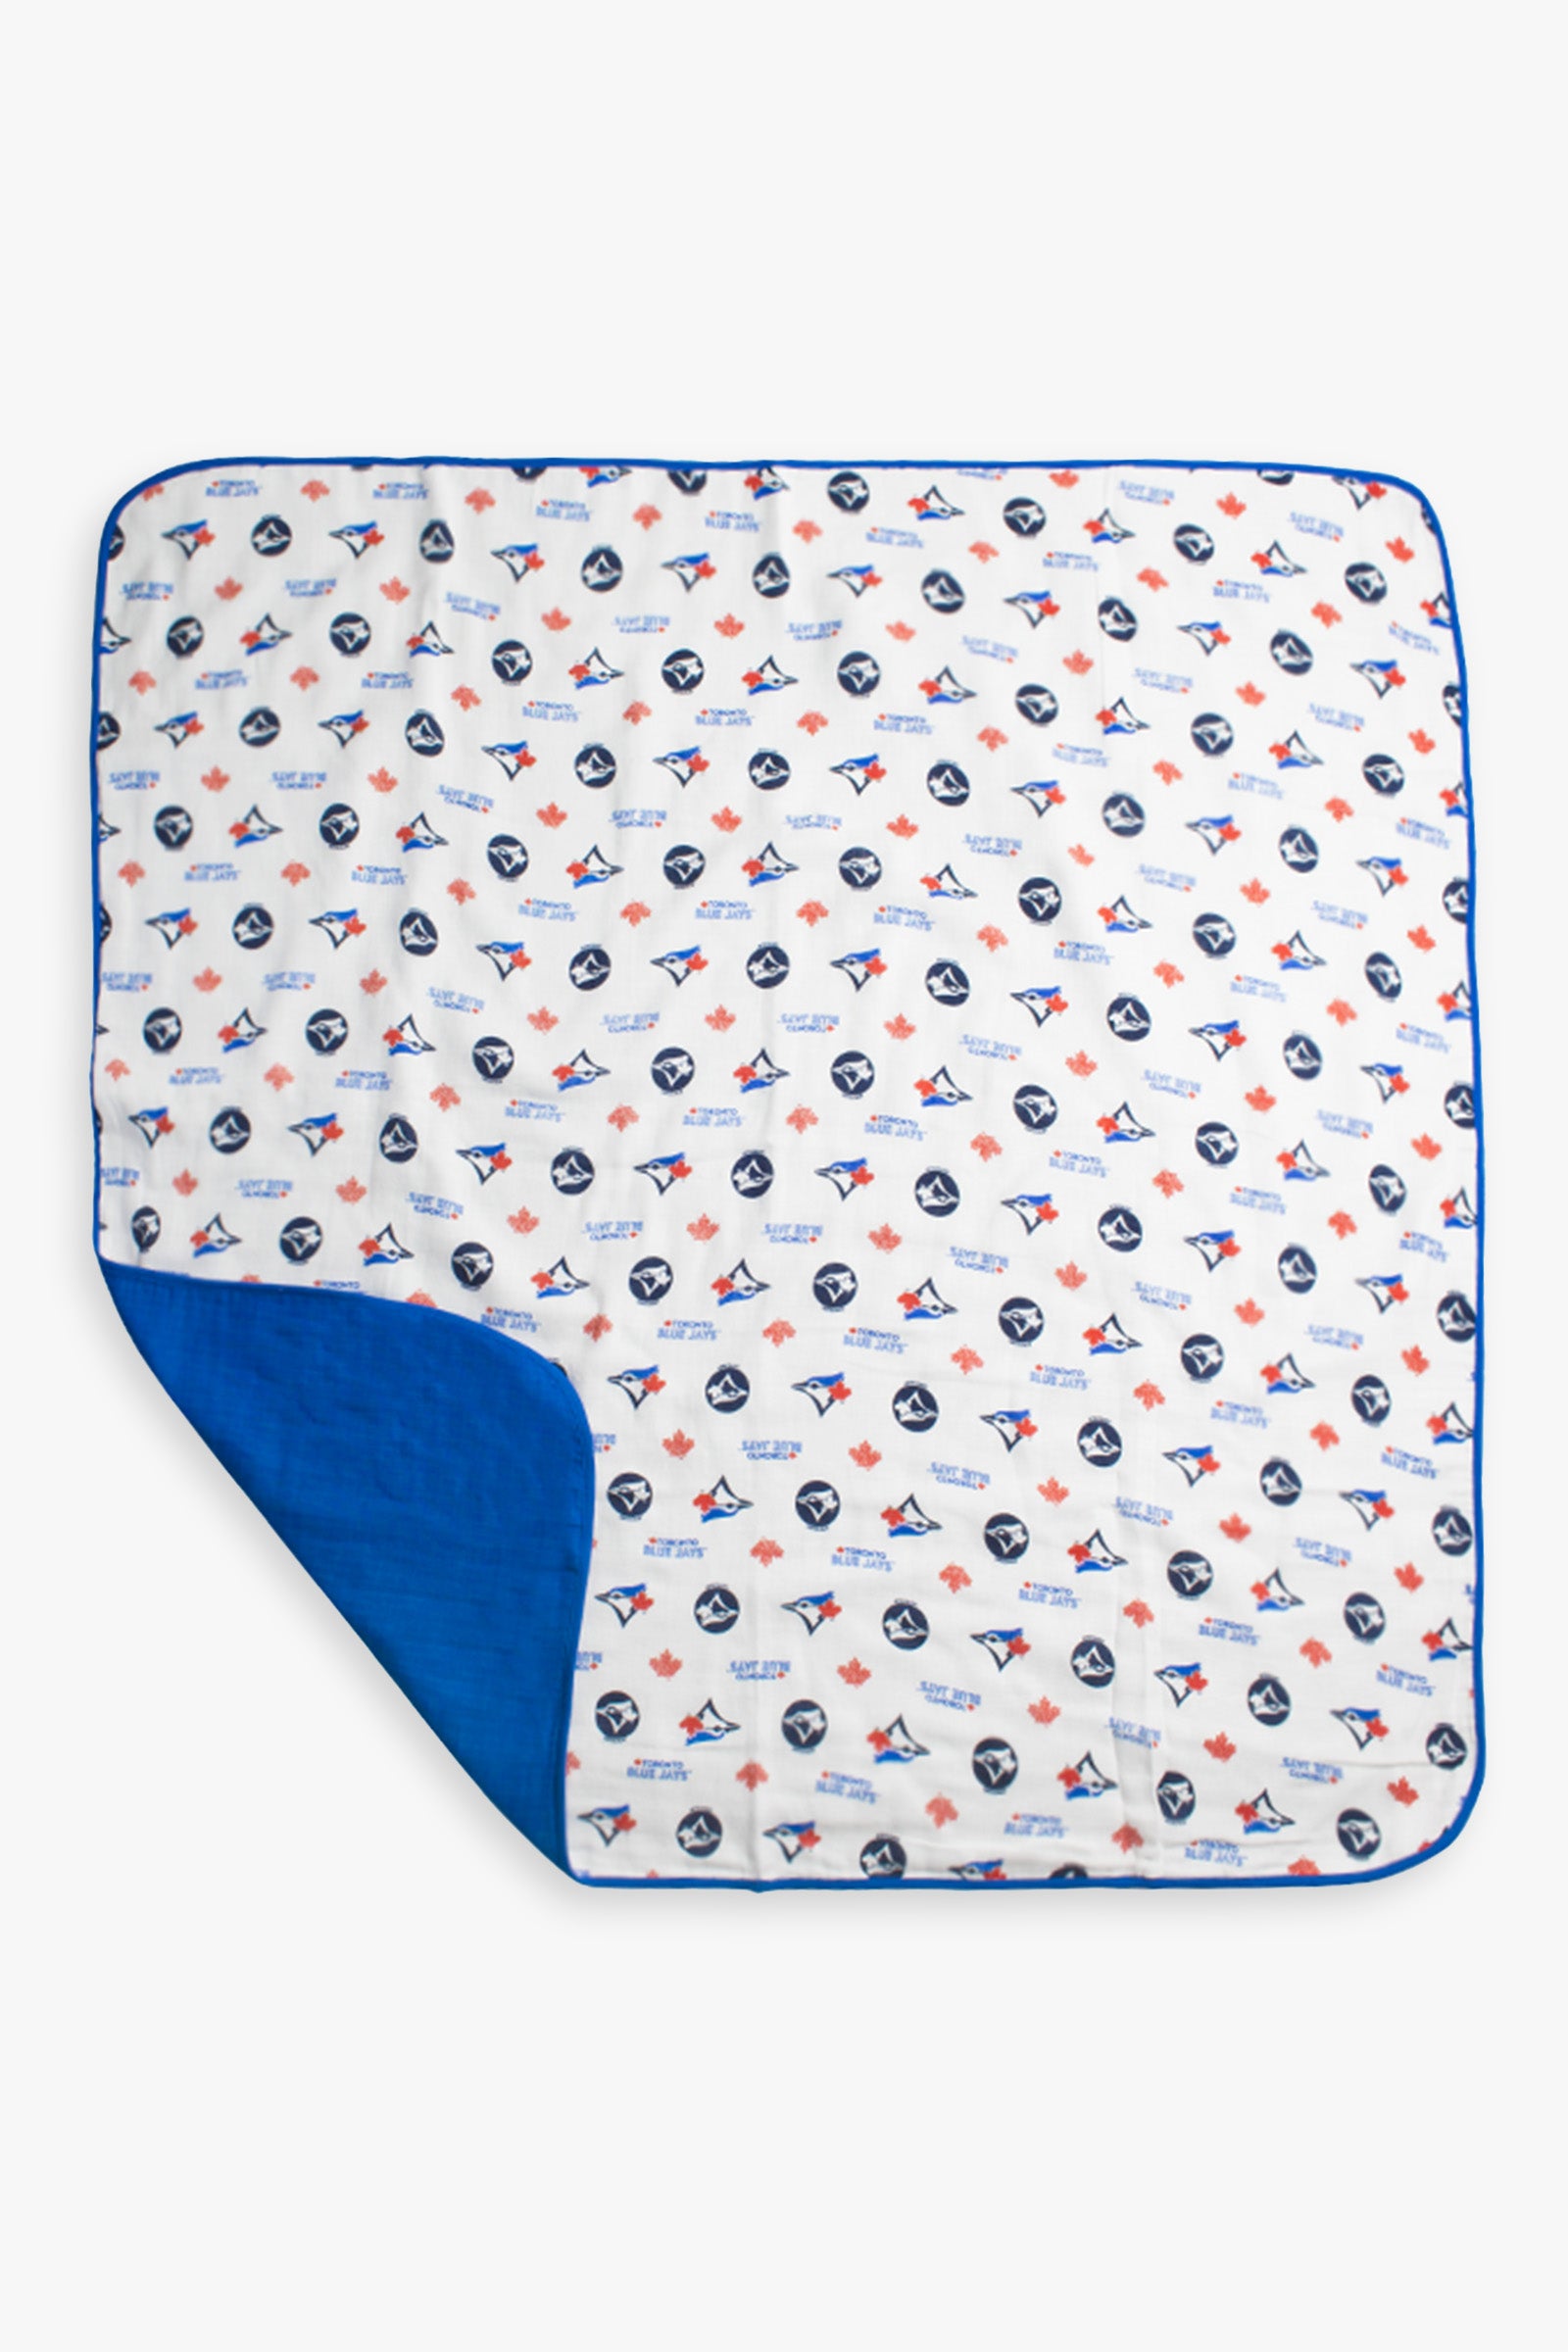 Gertex MLB Toronto Blue Jays Baby Muslin Blanket